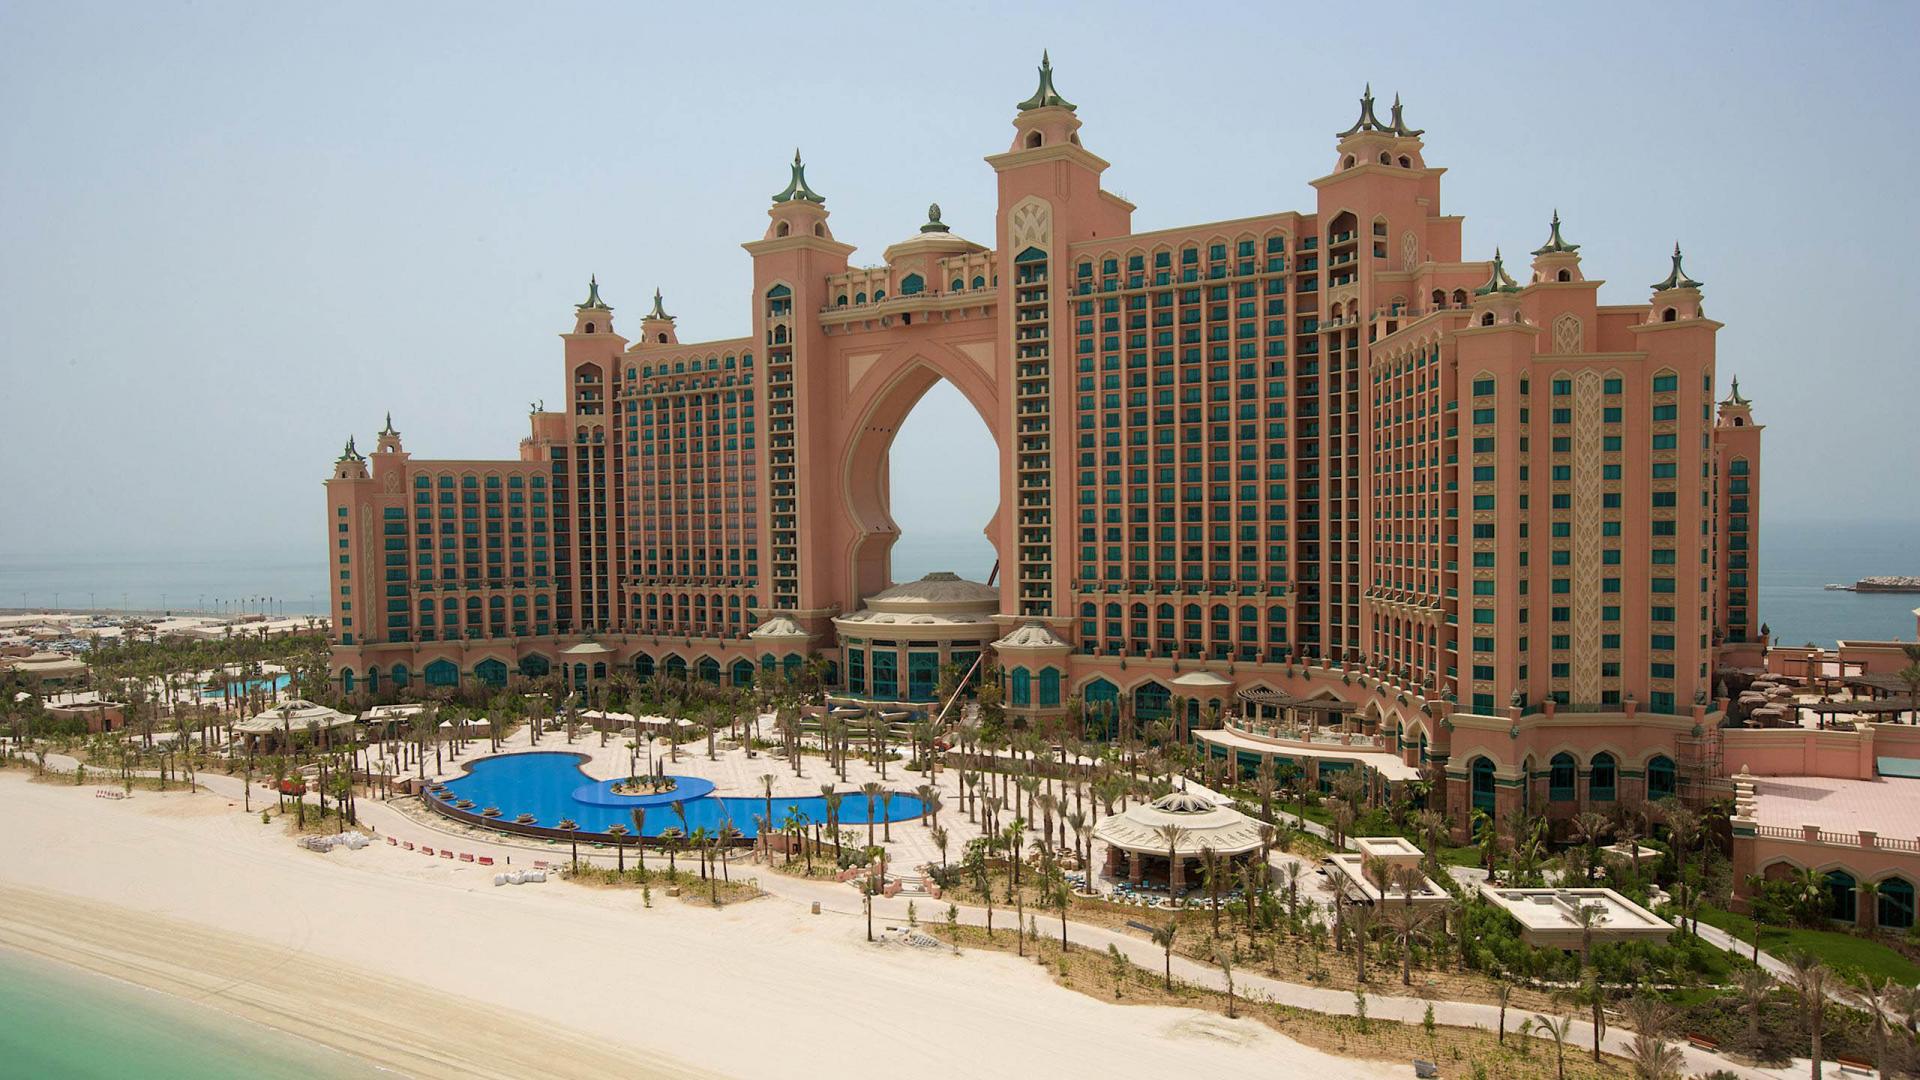 Atlantis Hotel Dubai City HD Wallpaper of City   hdwallpaper2013com